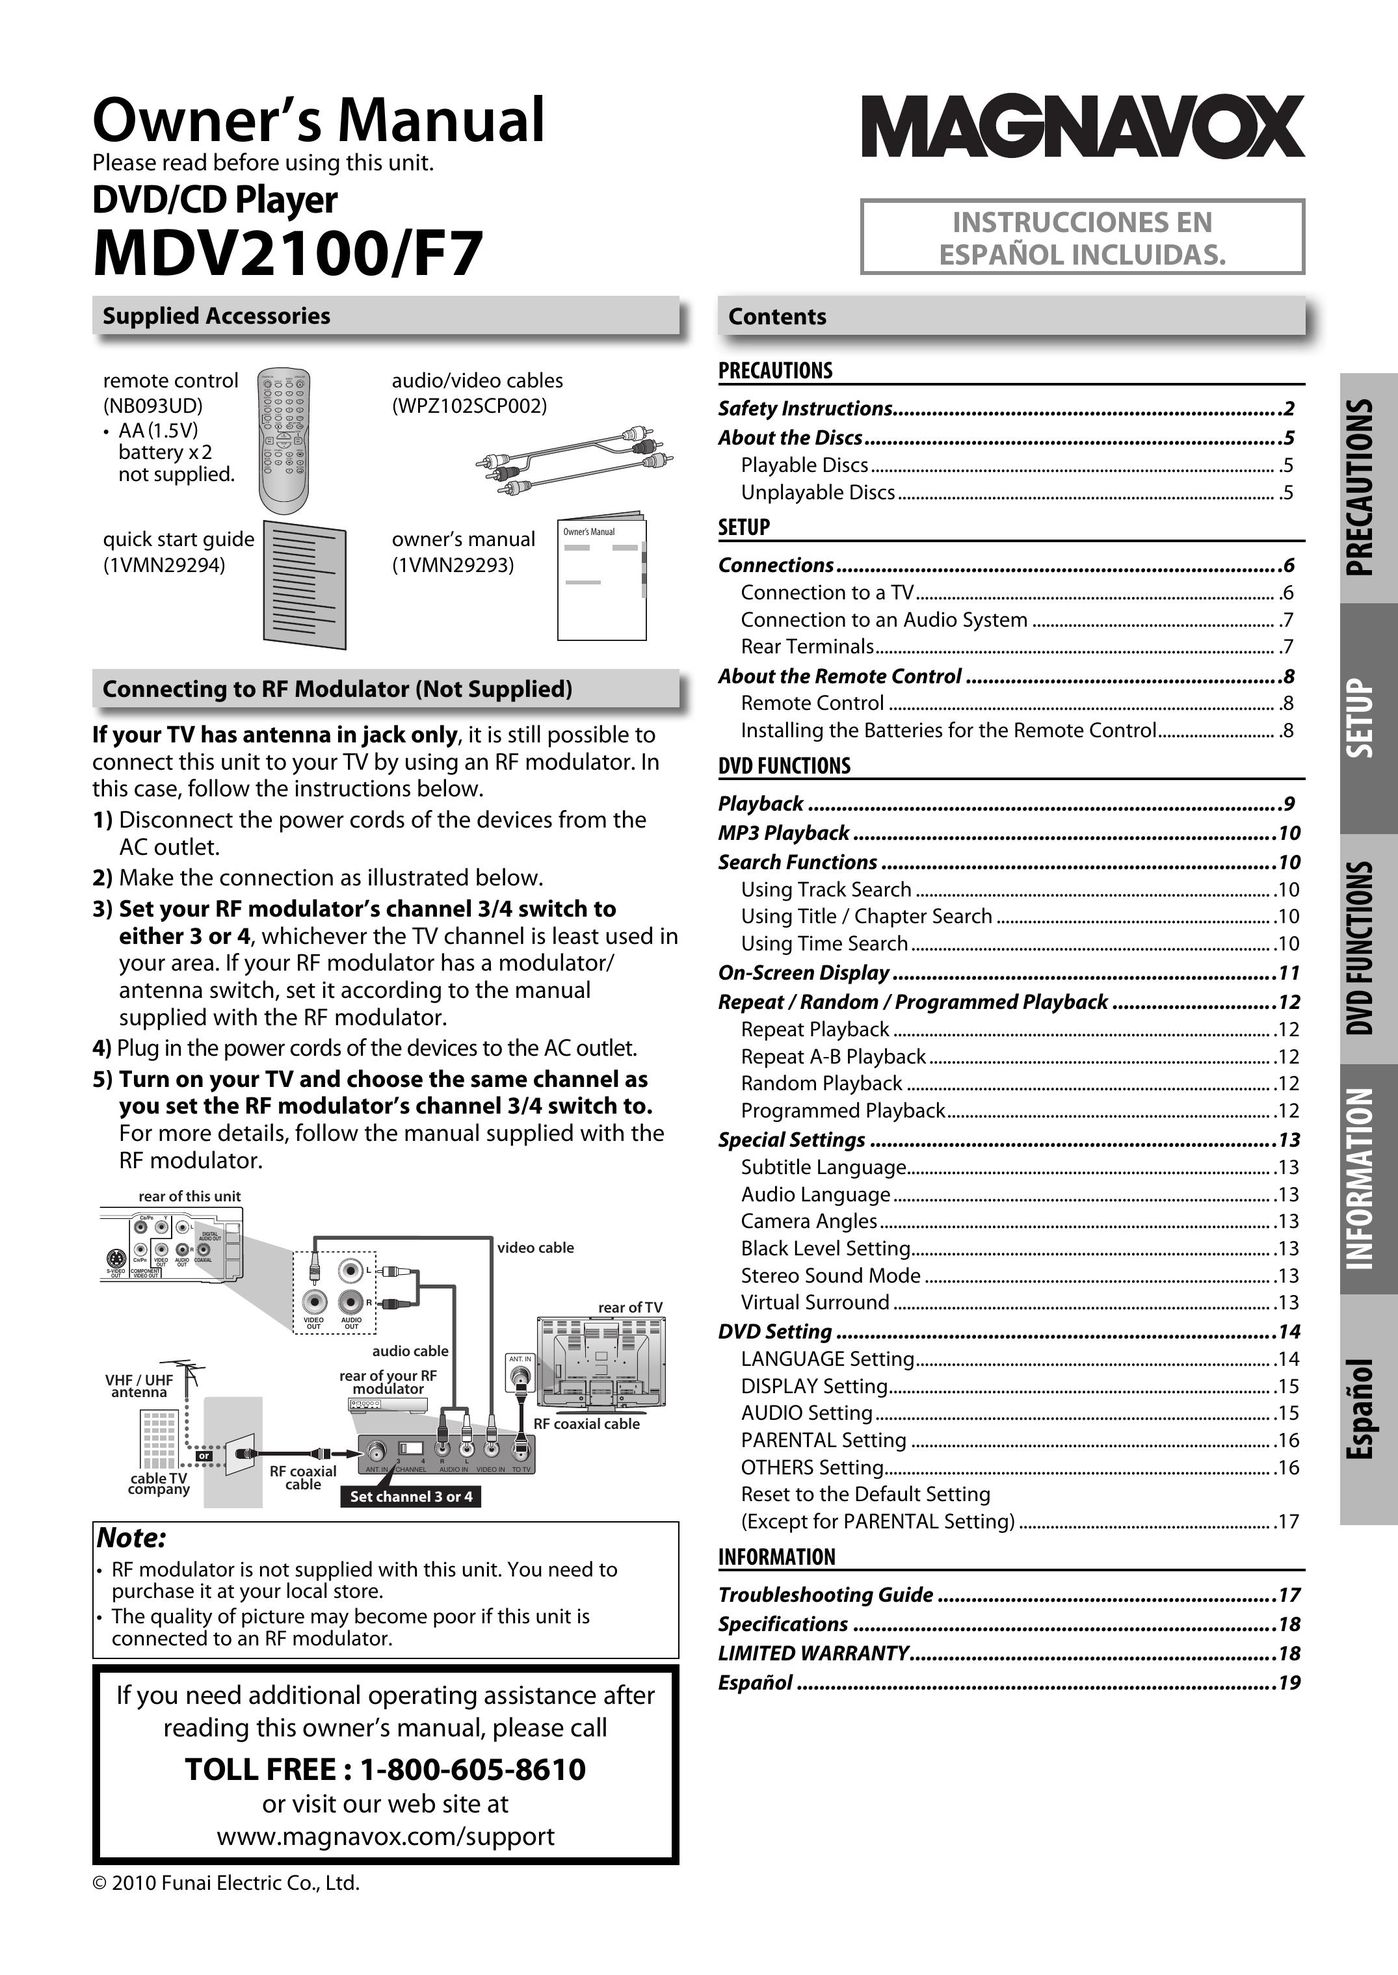 Magnavox MDV2100/F7 DVD Player User Manual